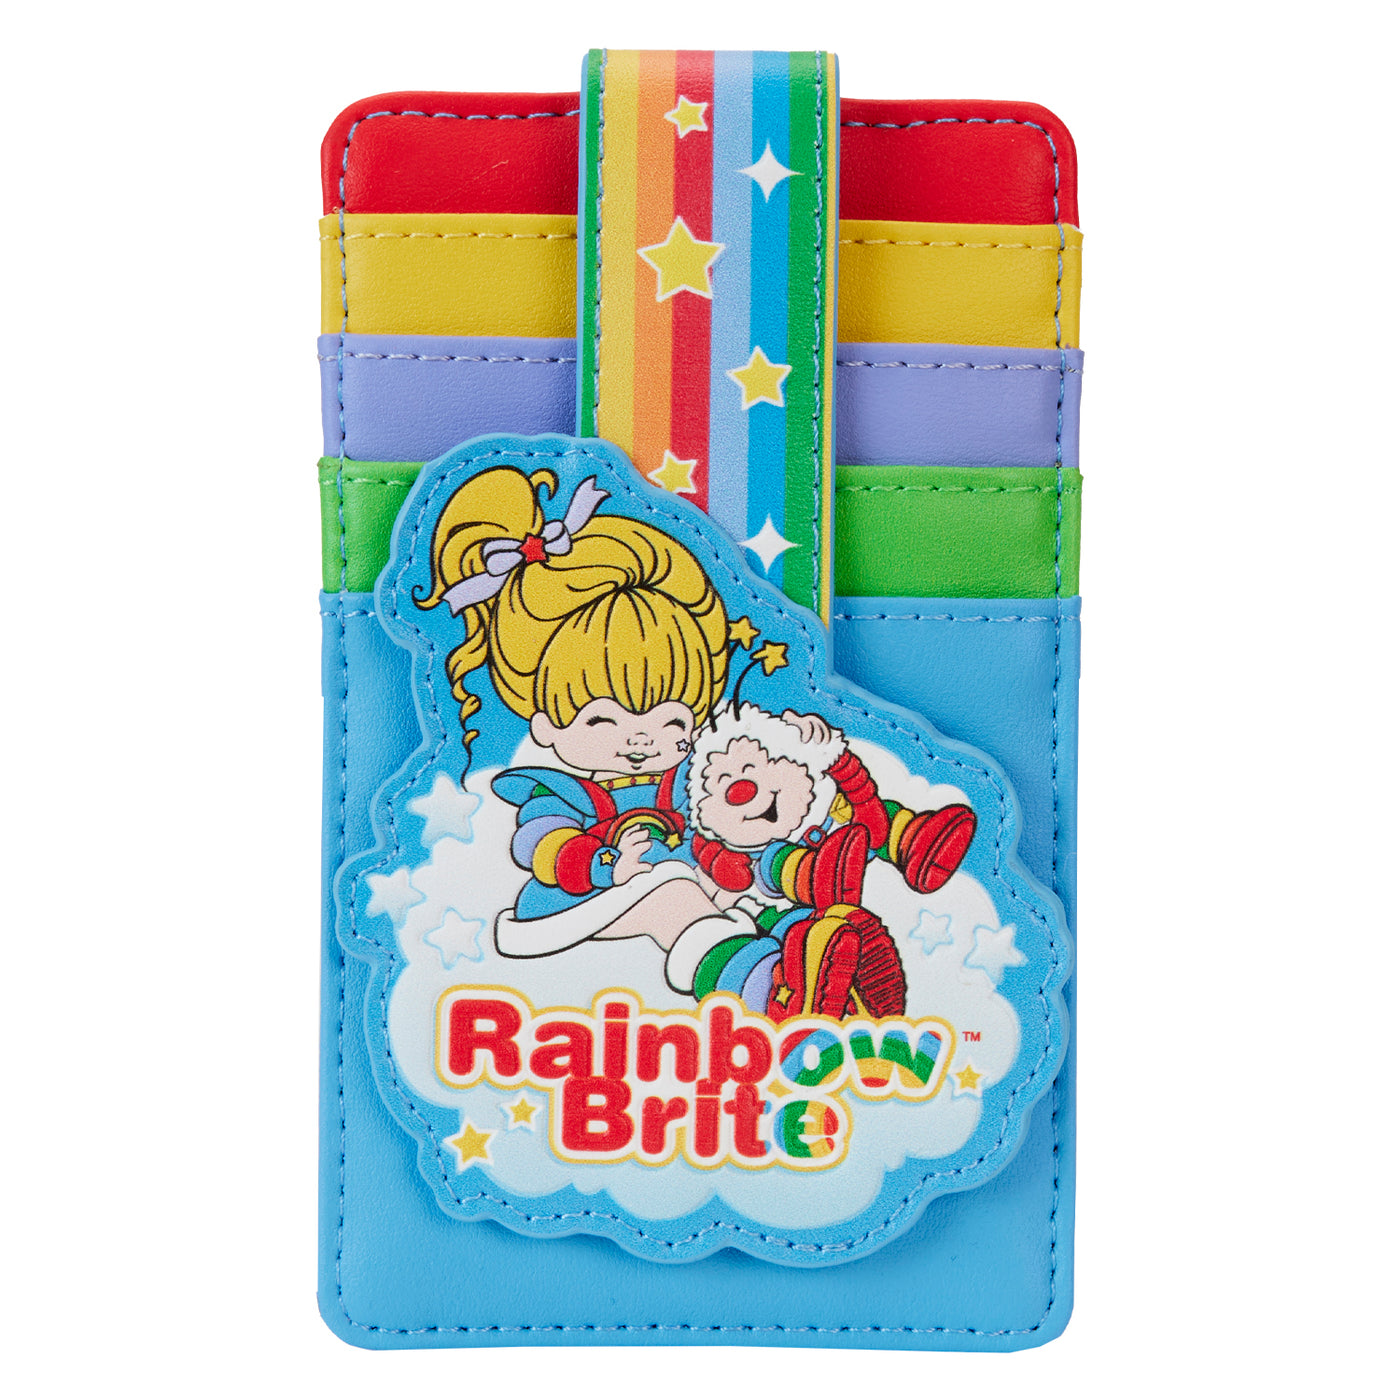 Hallmark Rainbow Brite Cloud Cardholder